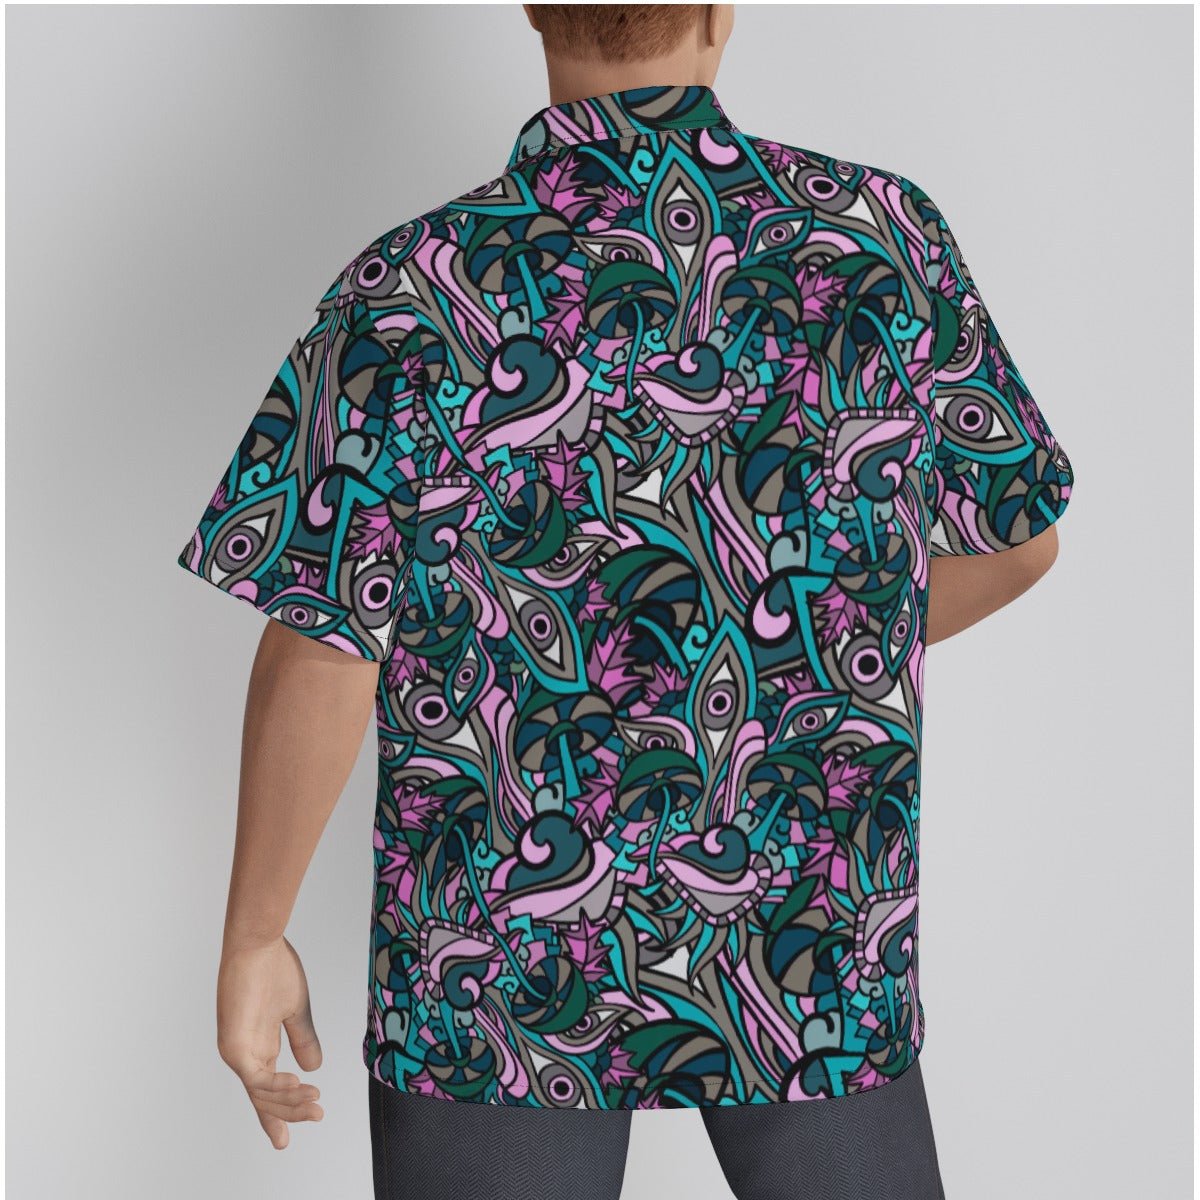 Wild Life Men's Hawaiian Shirt - BeExtra! Apparel & More